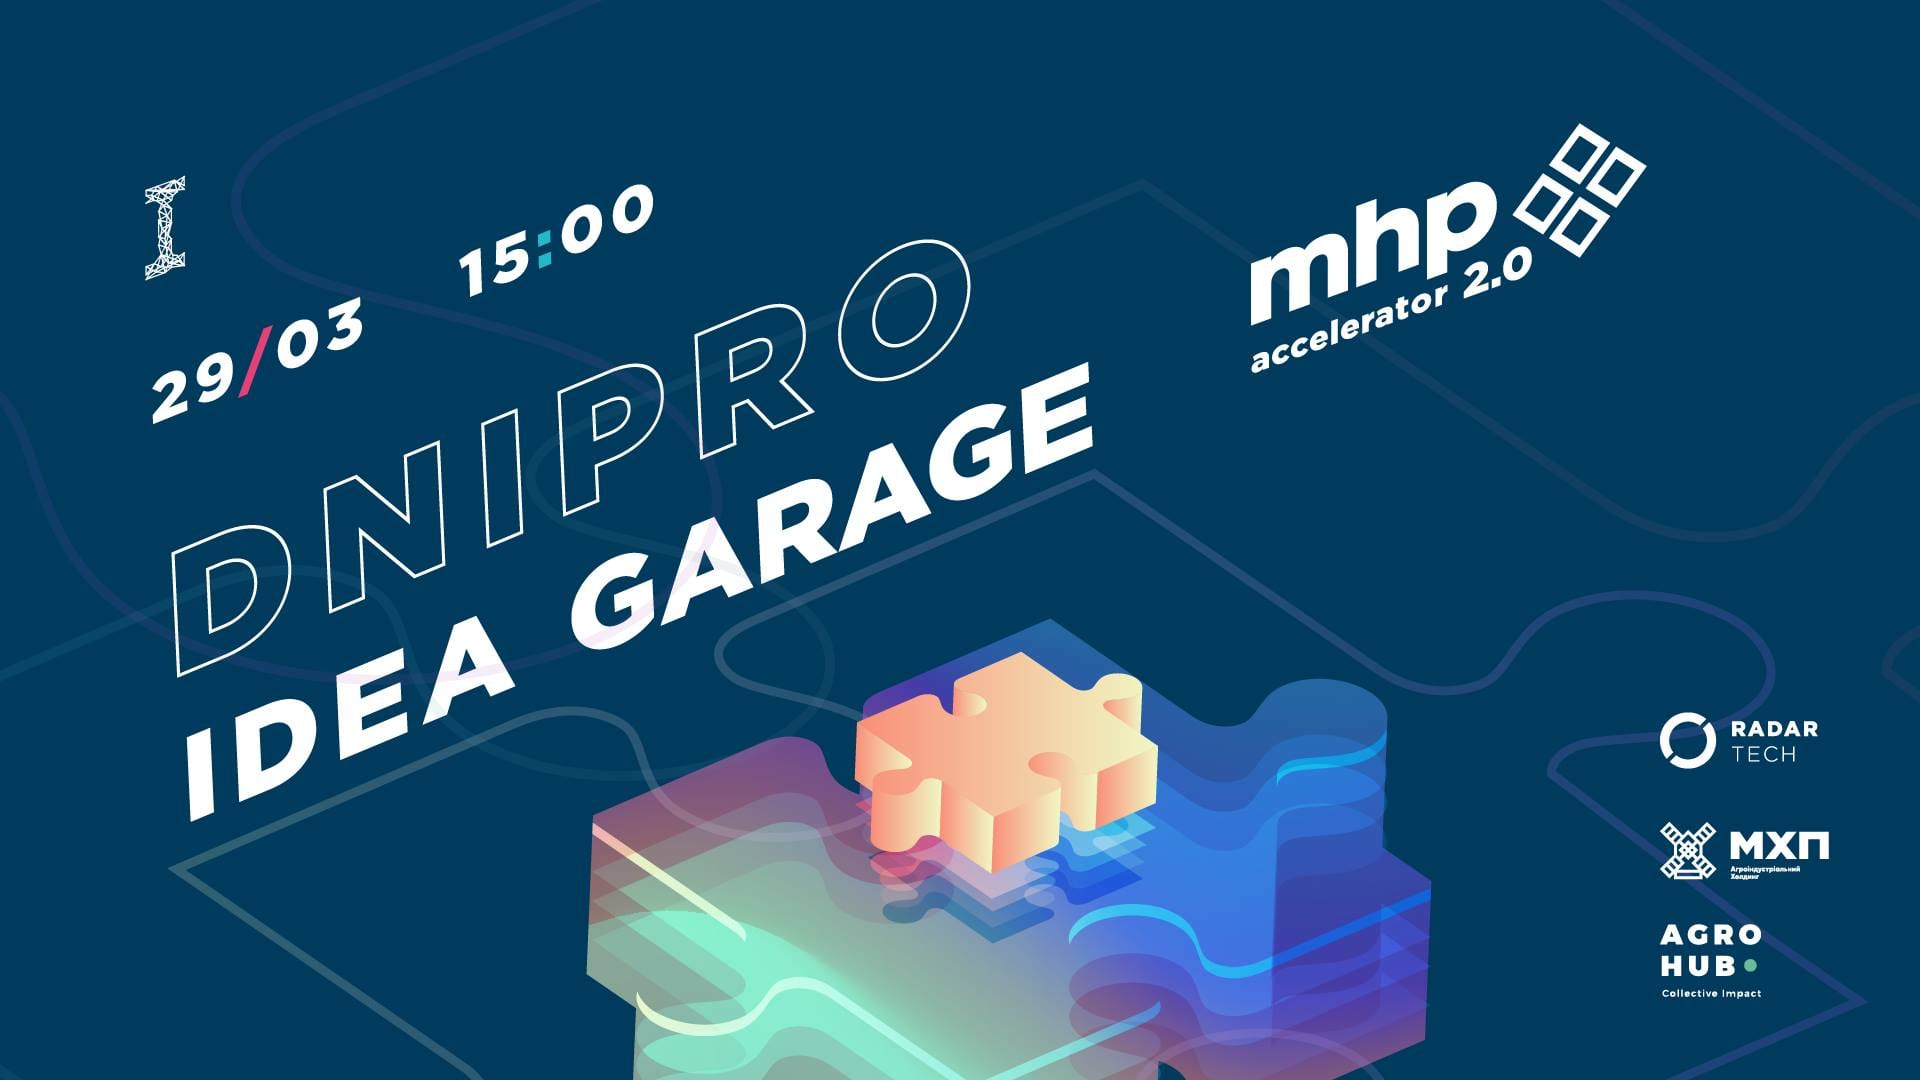 Dnipro Idea Garage Днепр, 29.03.2019, цена, купить билеты. Афиша Днепра